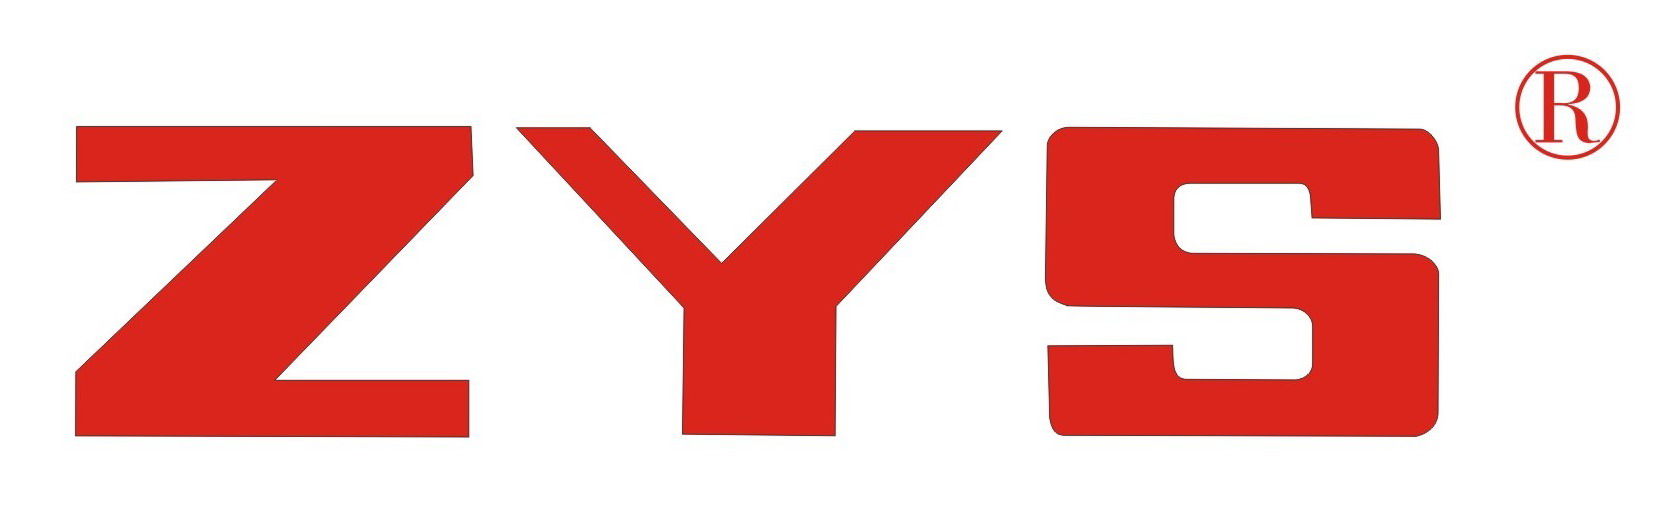 brand logo 6